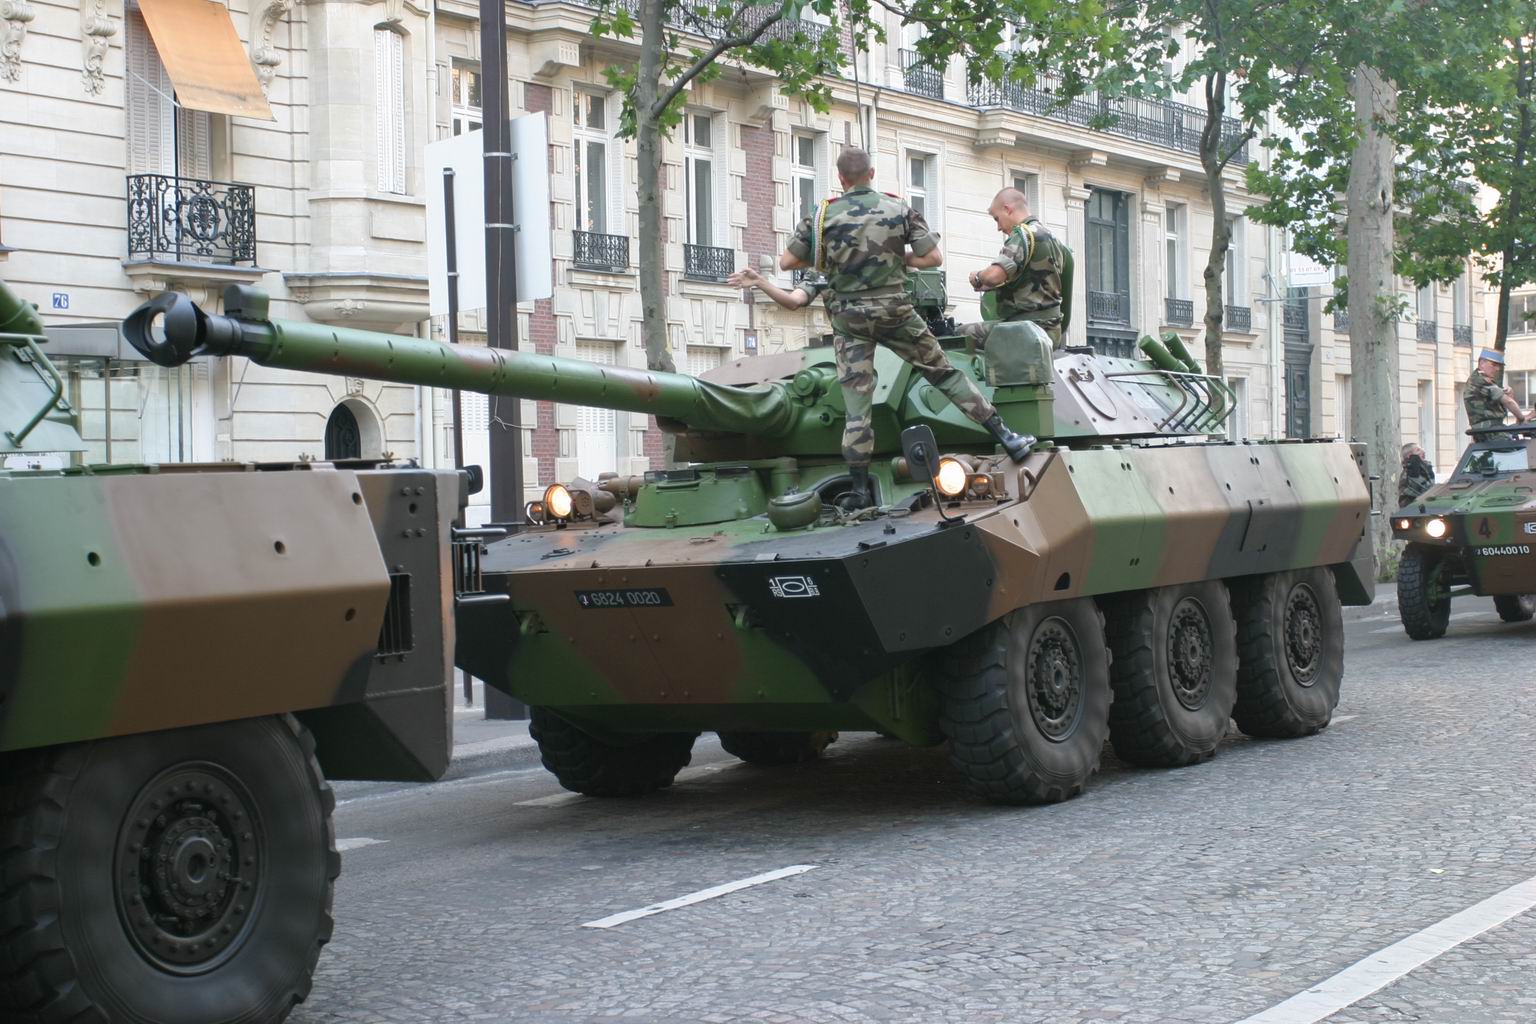 Zelenskyy thanks Macron for decision to supply “light tanks and Bastion APCs to Ukraine”